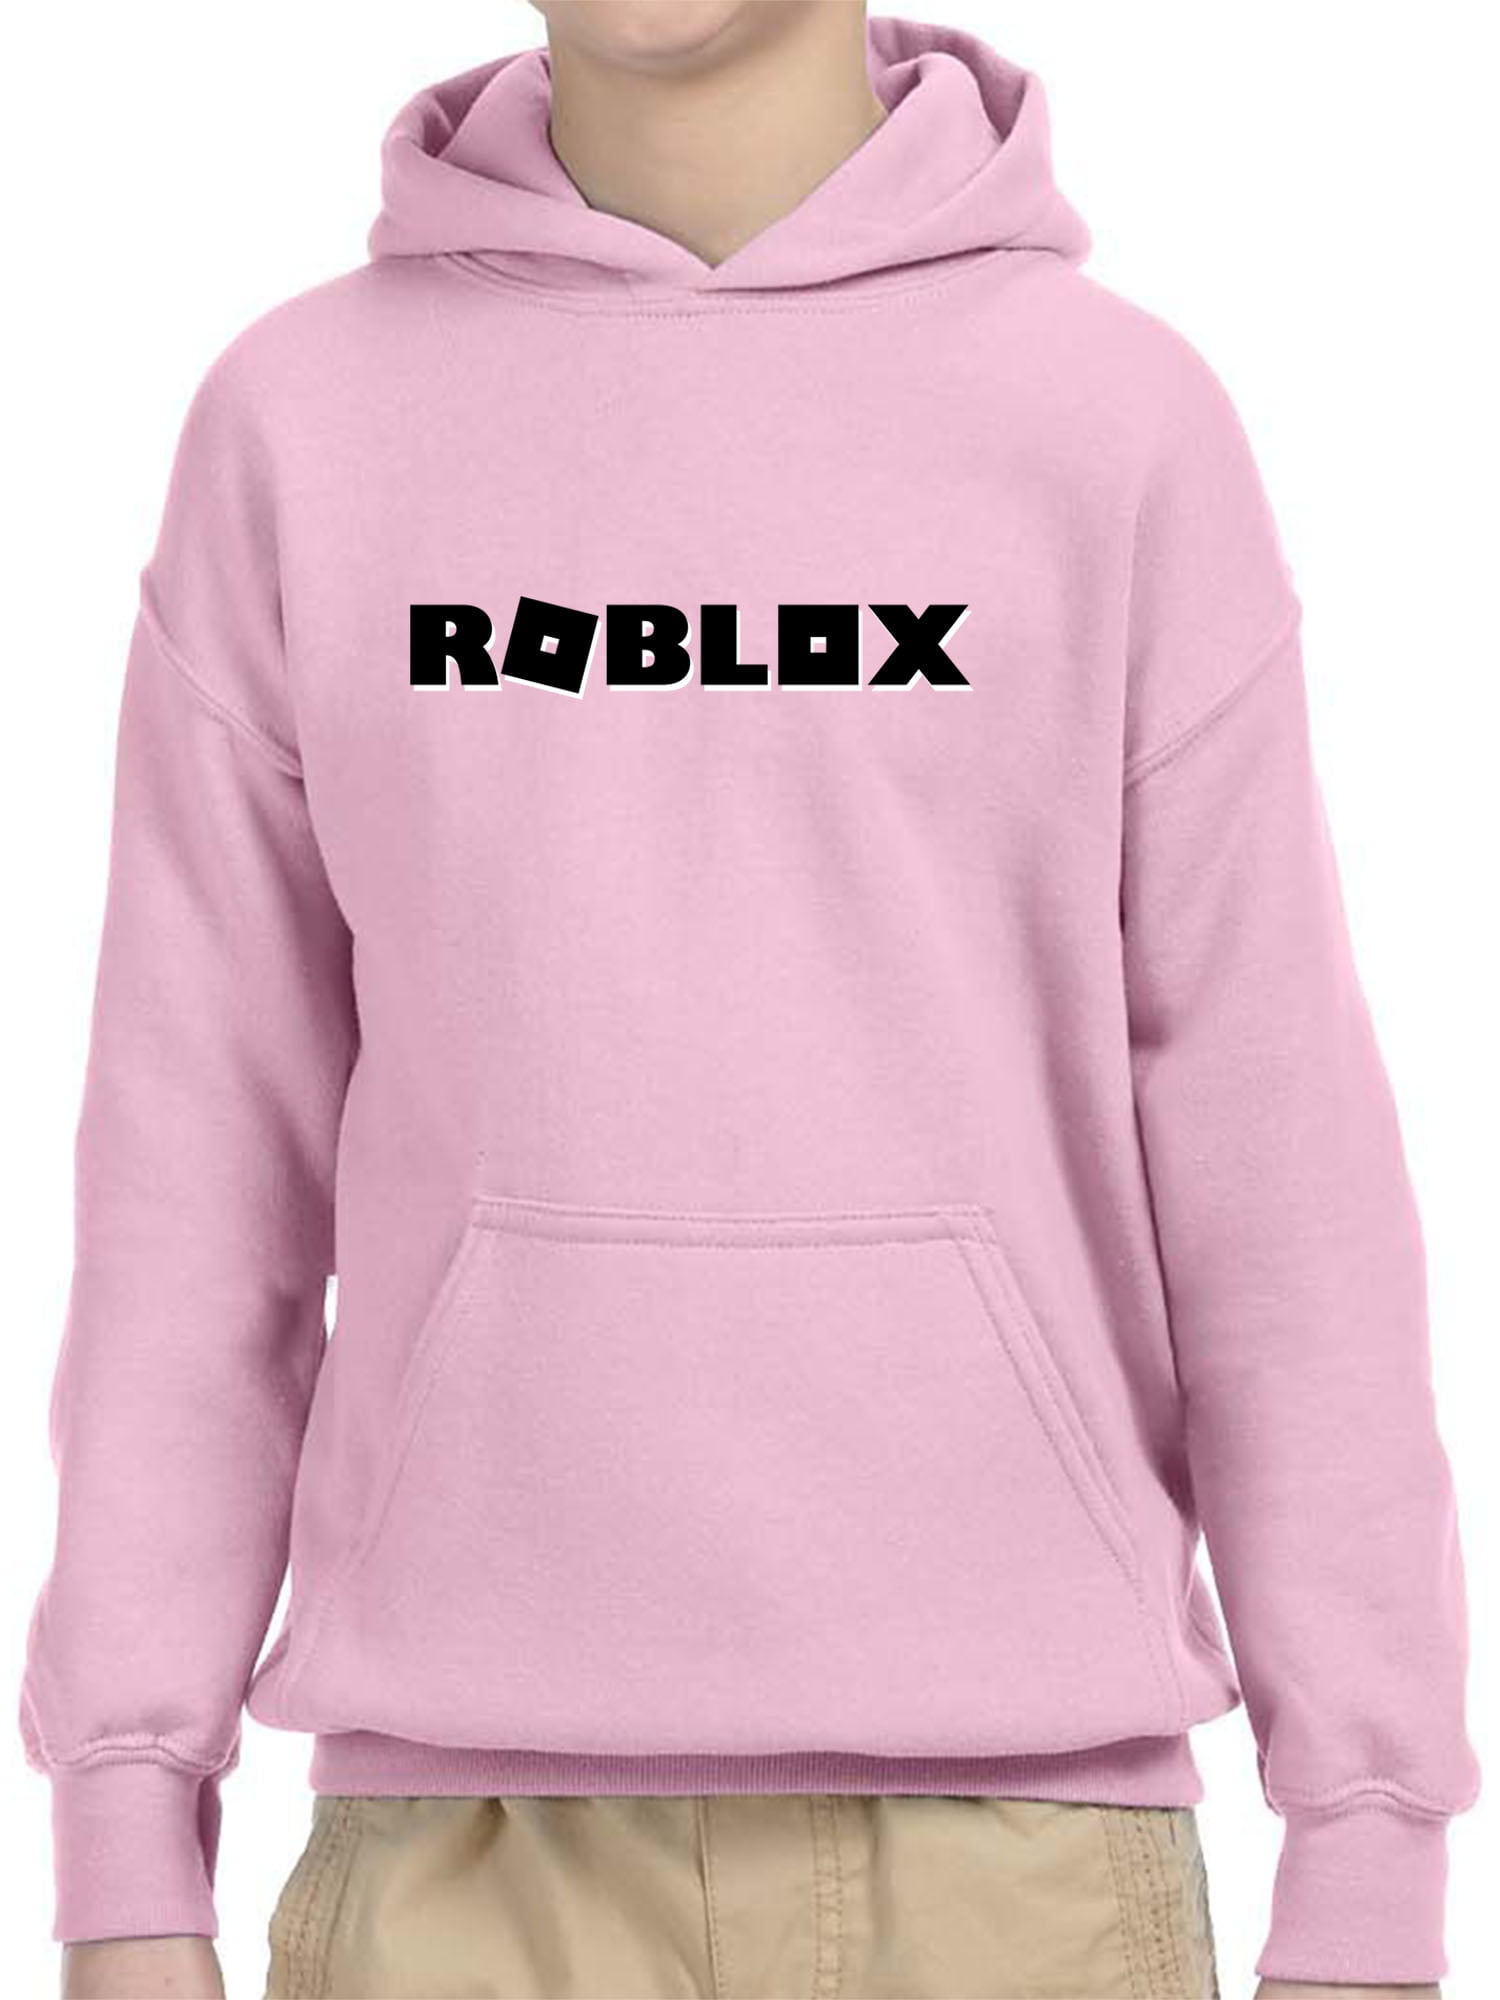 New Way New Way 1168 Youth Hoodie Roblox Block Logo Game Accent Unisex Pullover Sweatshirt Medium Light Pink Walmart Com Walmart Com - roblox logo but in pink